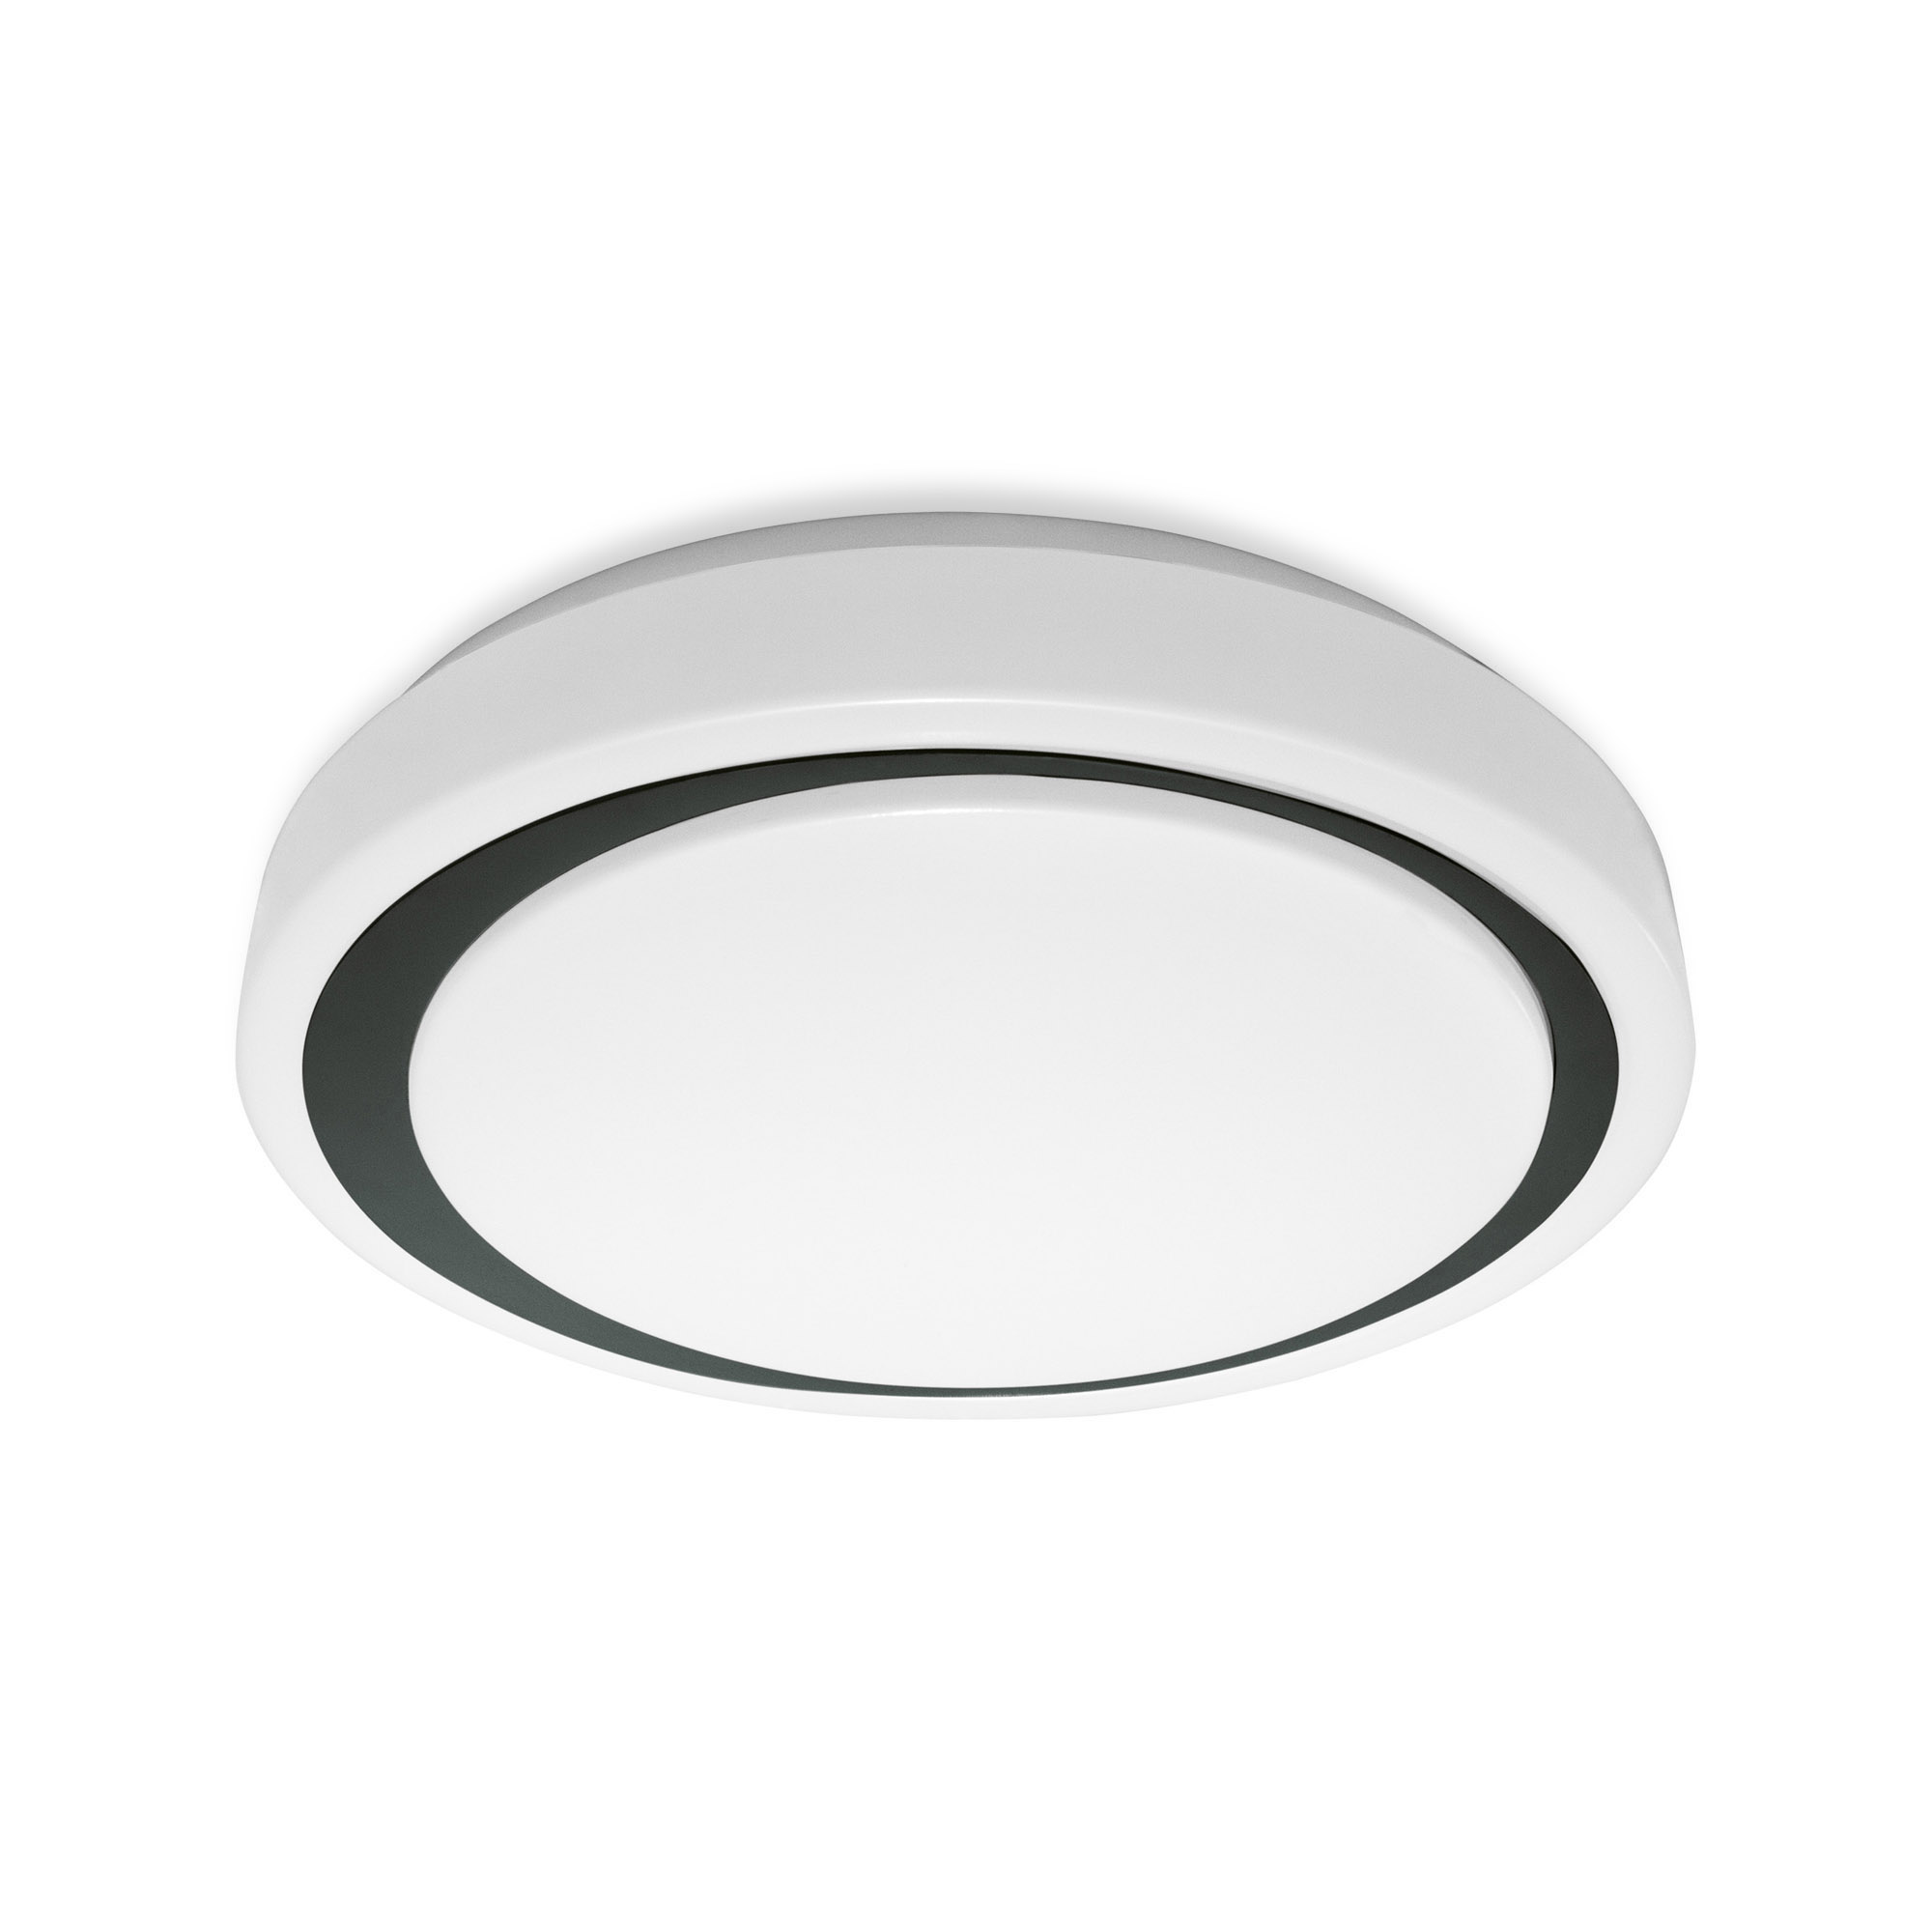 LEDVANCE SMART+ WiFi Tunable White LED Ceiling Light ORBIS Moon 380mm white-black 2500lm